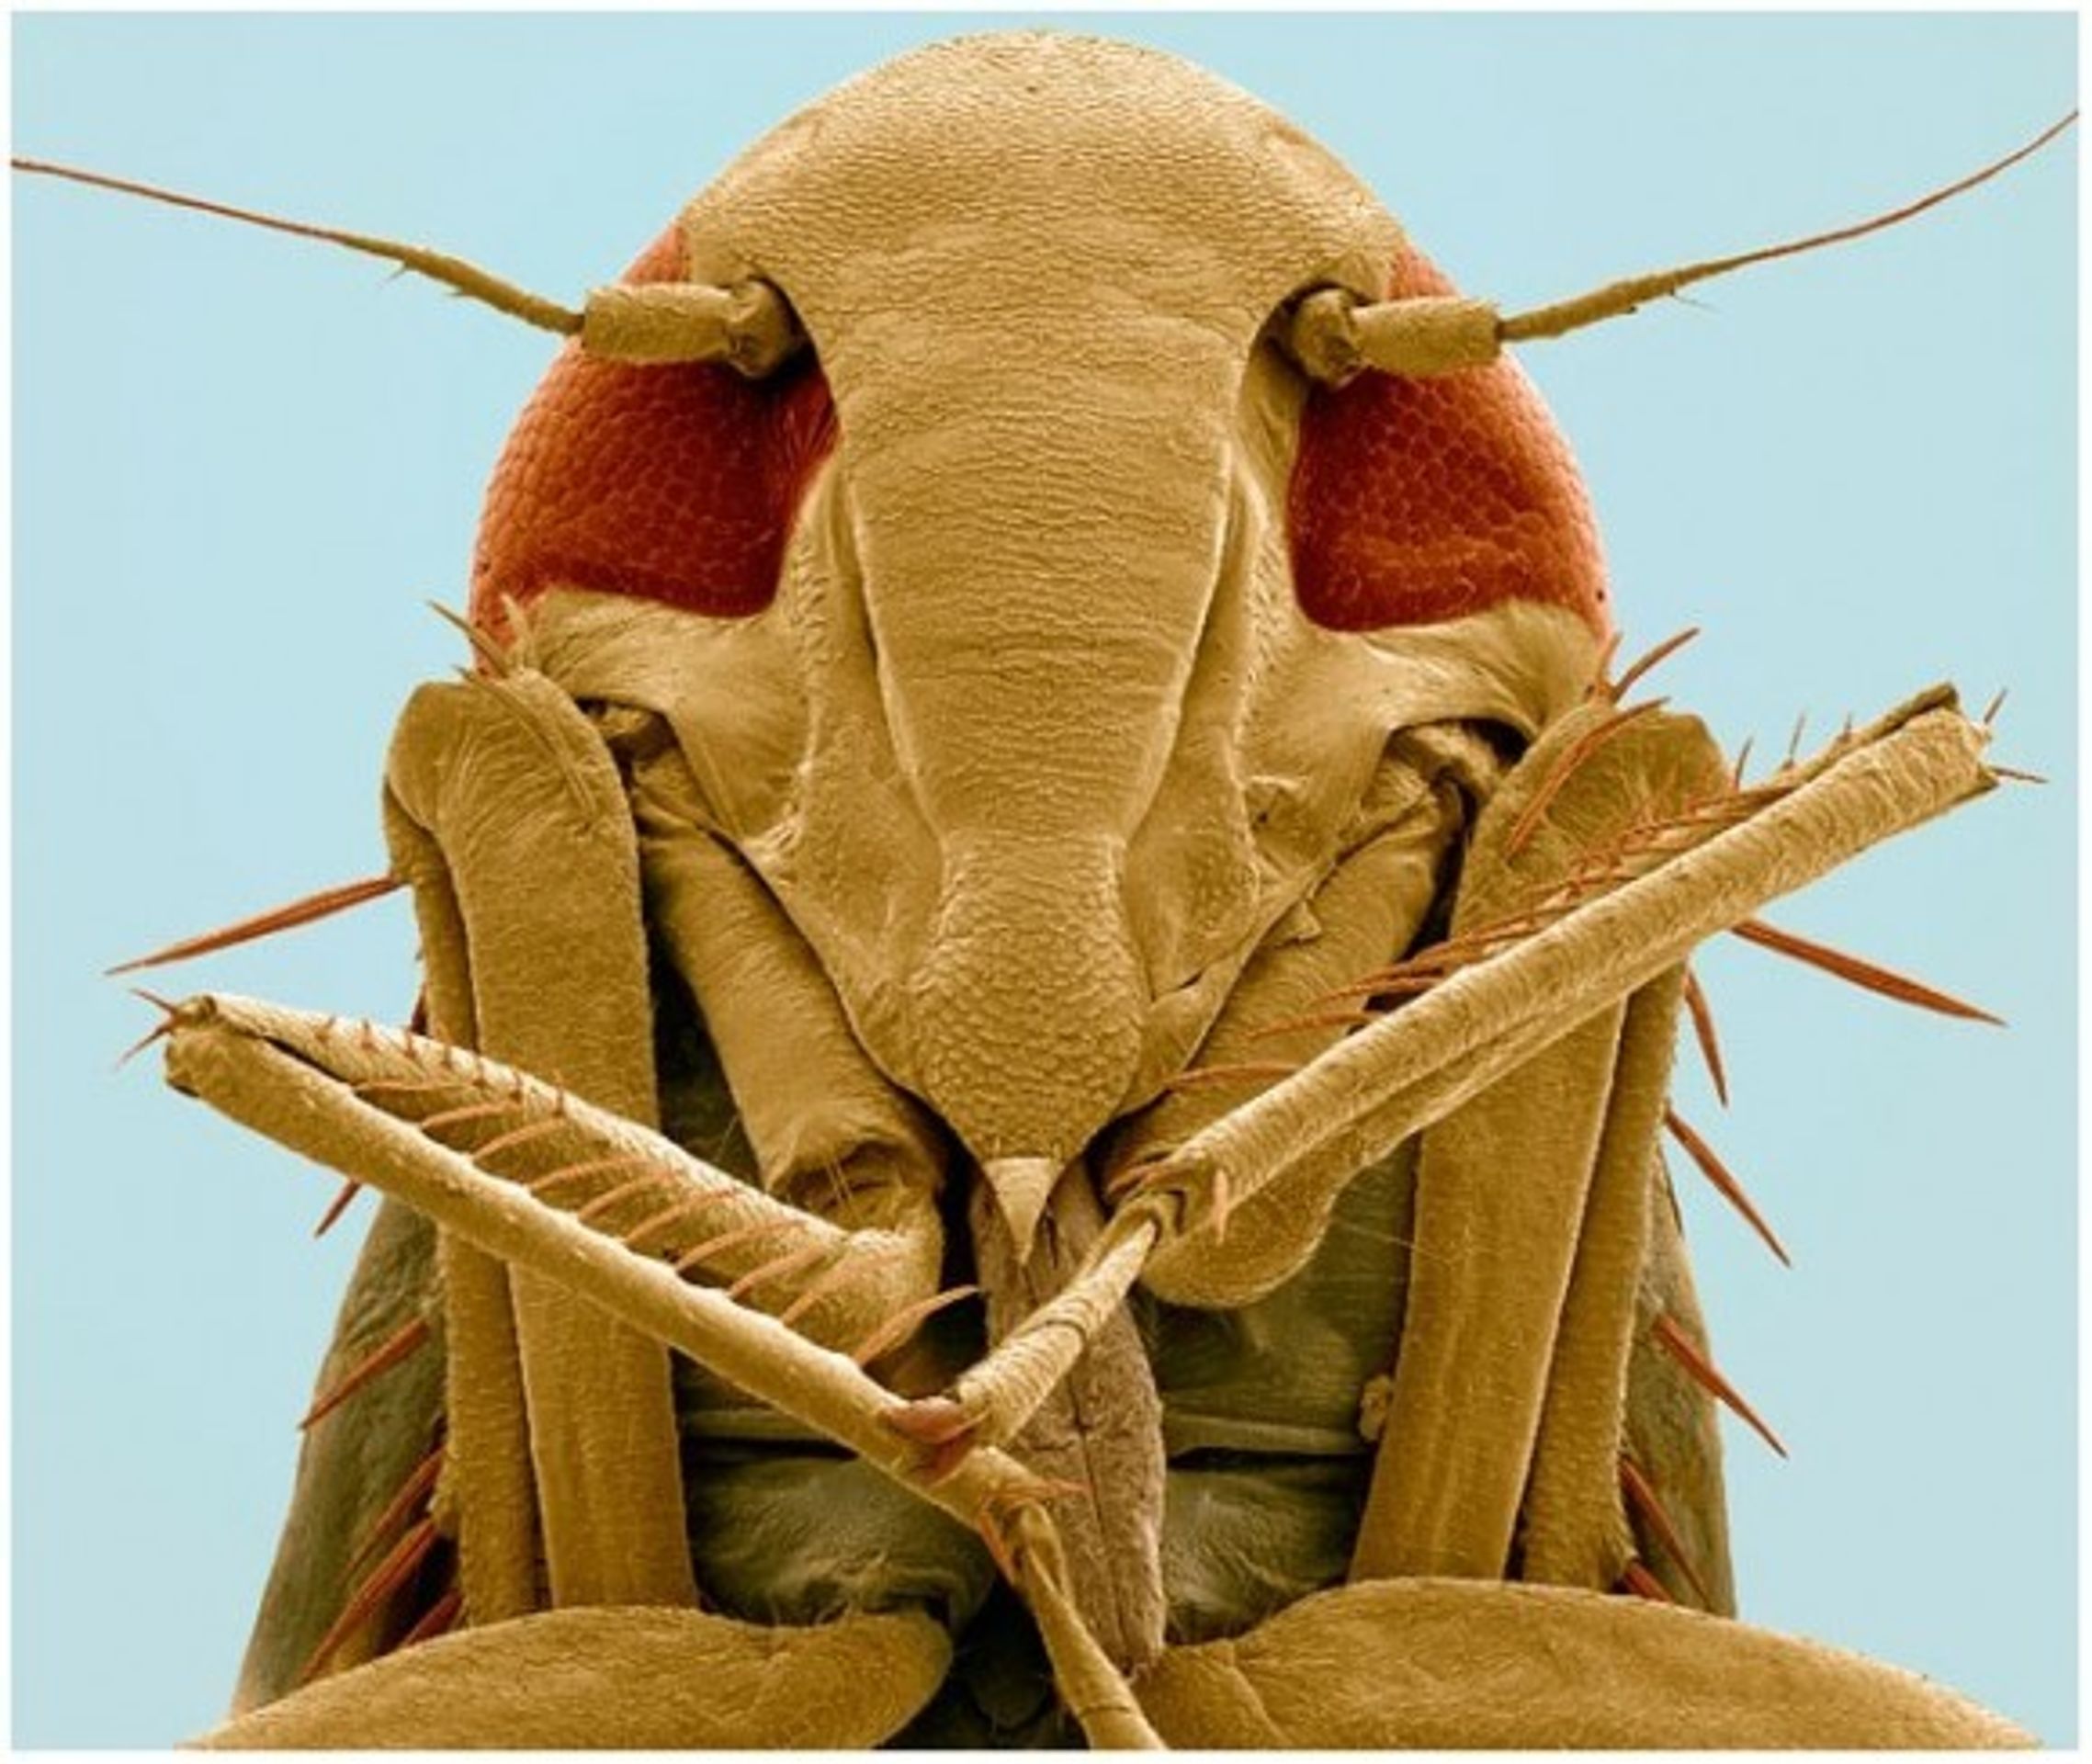 Hmyz pod elektronovým mikroskopem - 19 - GALERIE: Hmyz pod elektronovým mikroskopem (3/20)